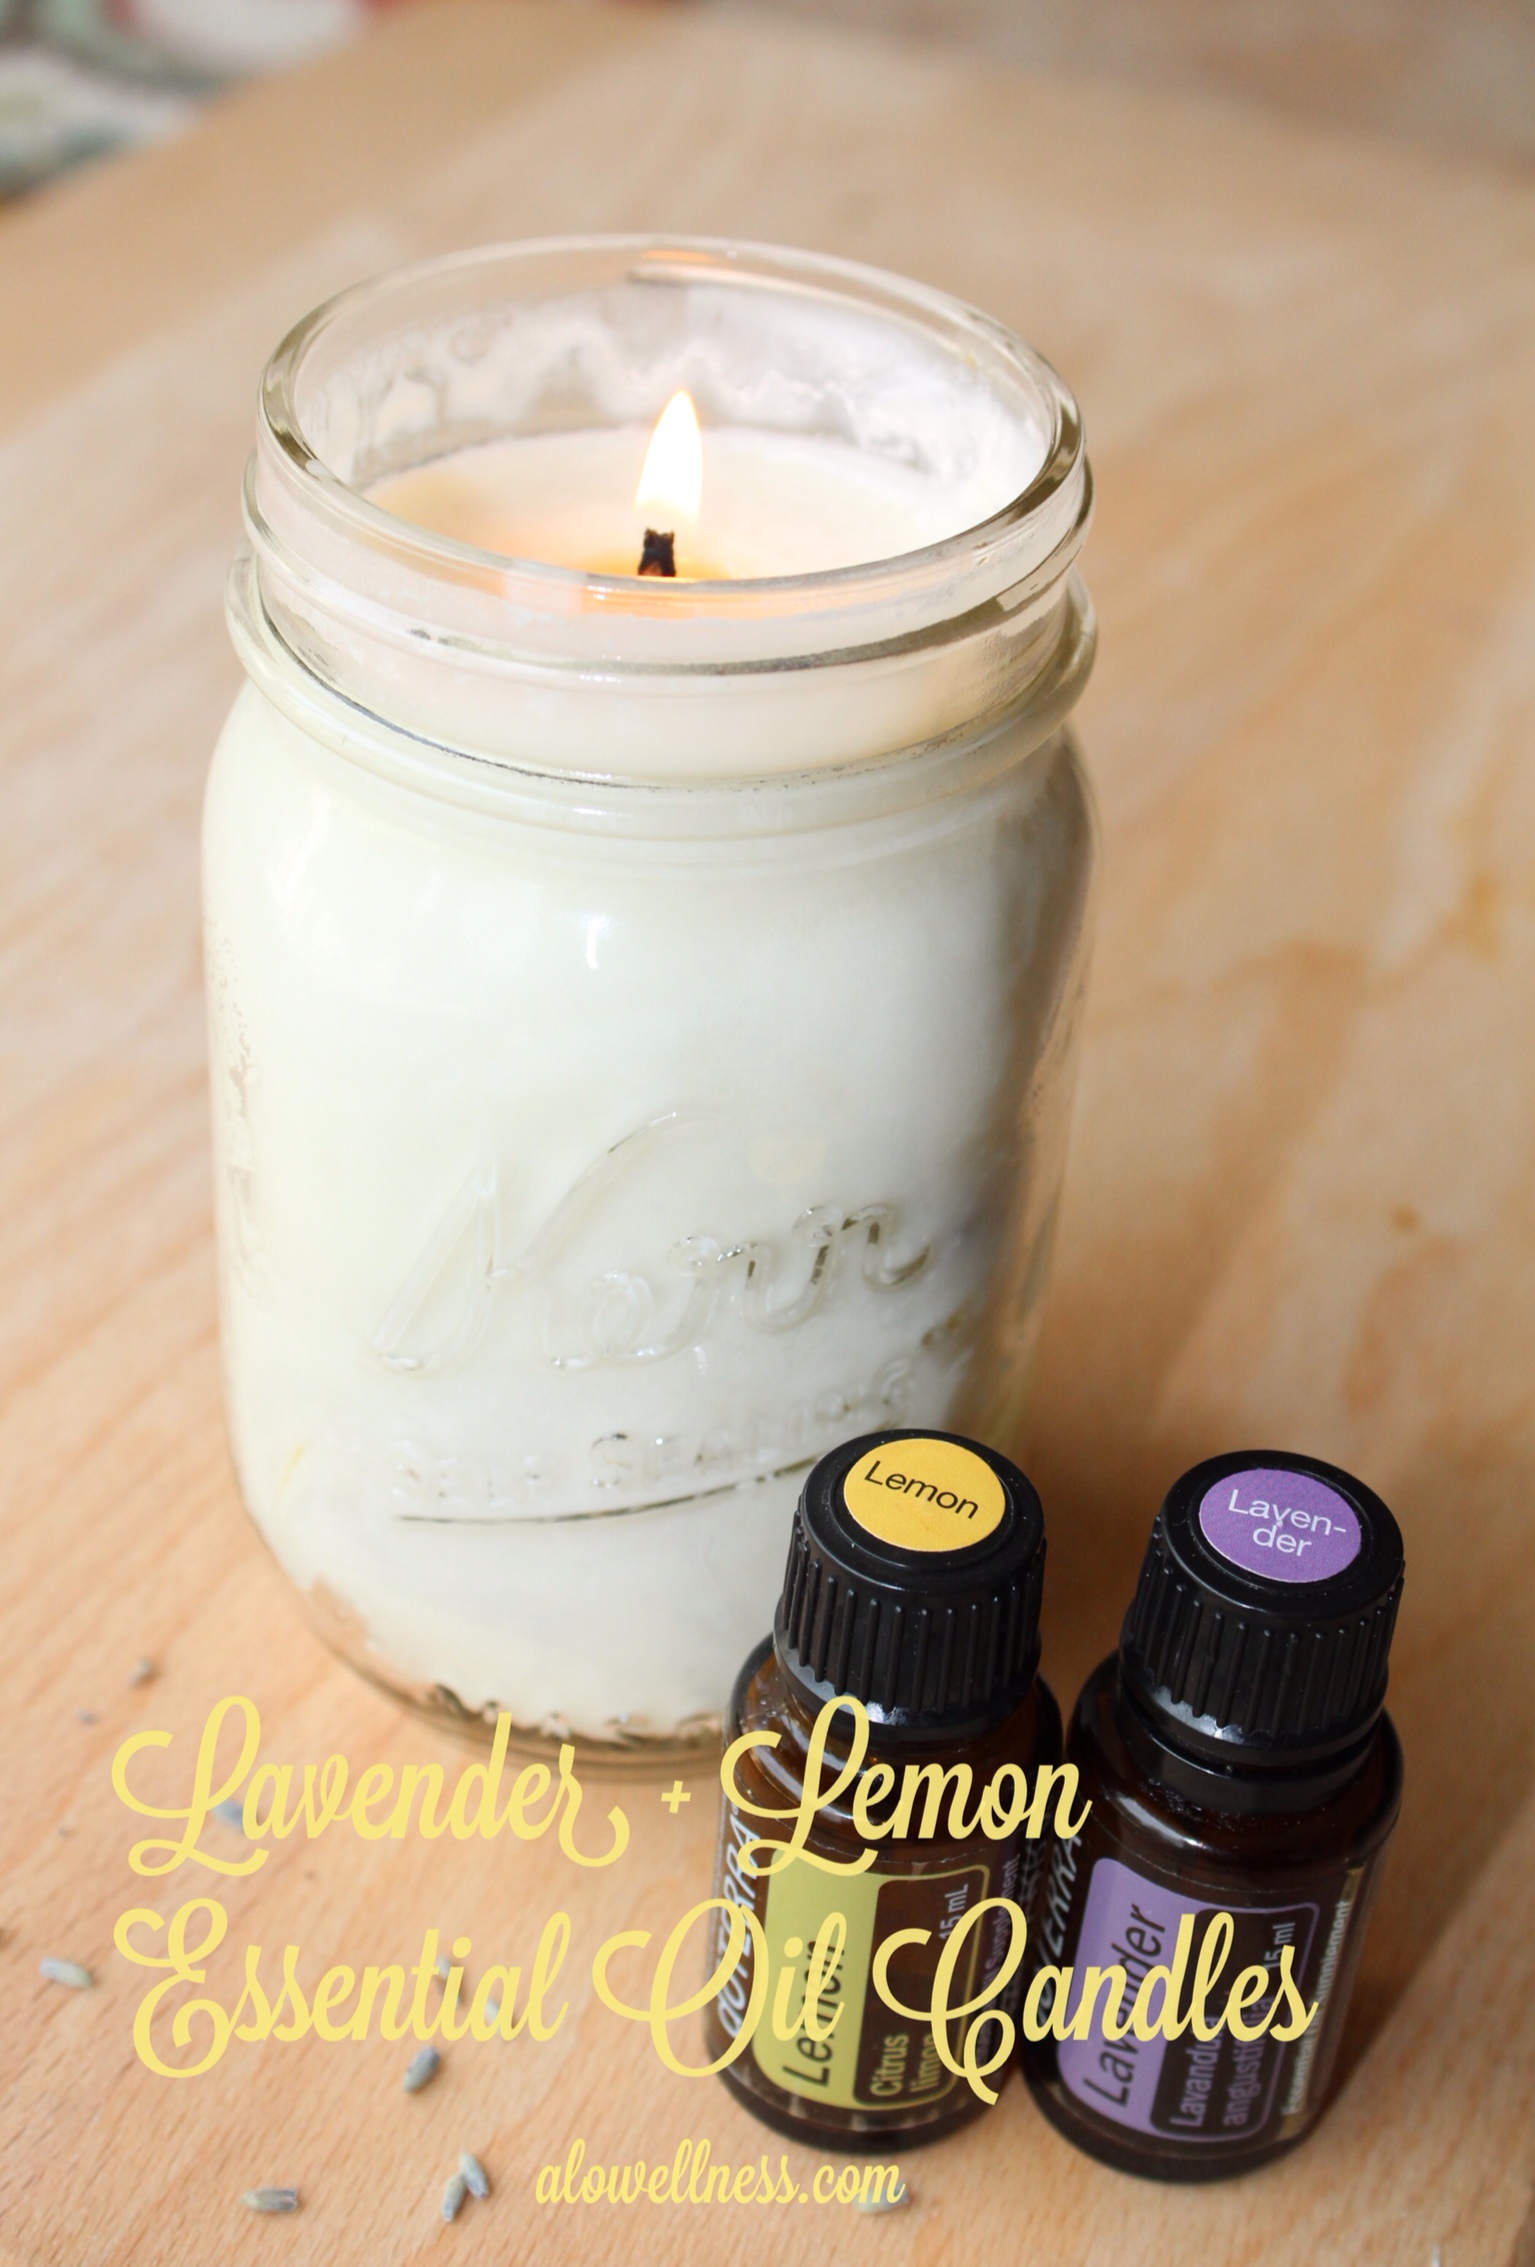 handmade} Lavender + Lemon Essential Oil Candles – Alo Wellness